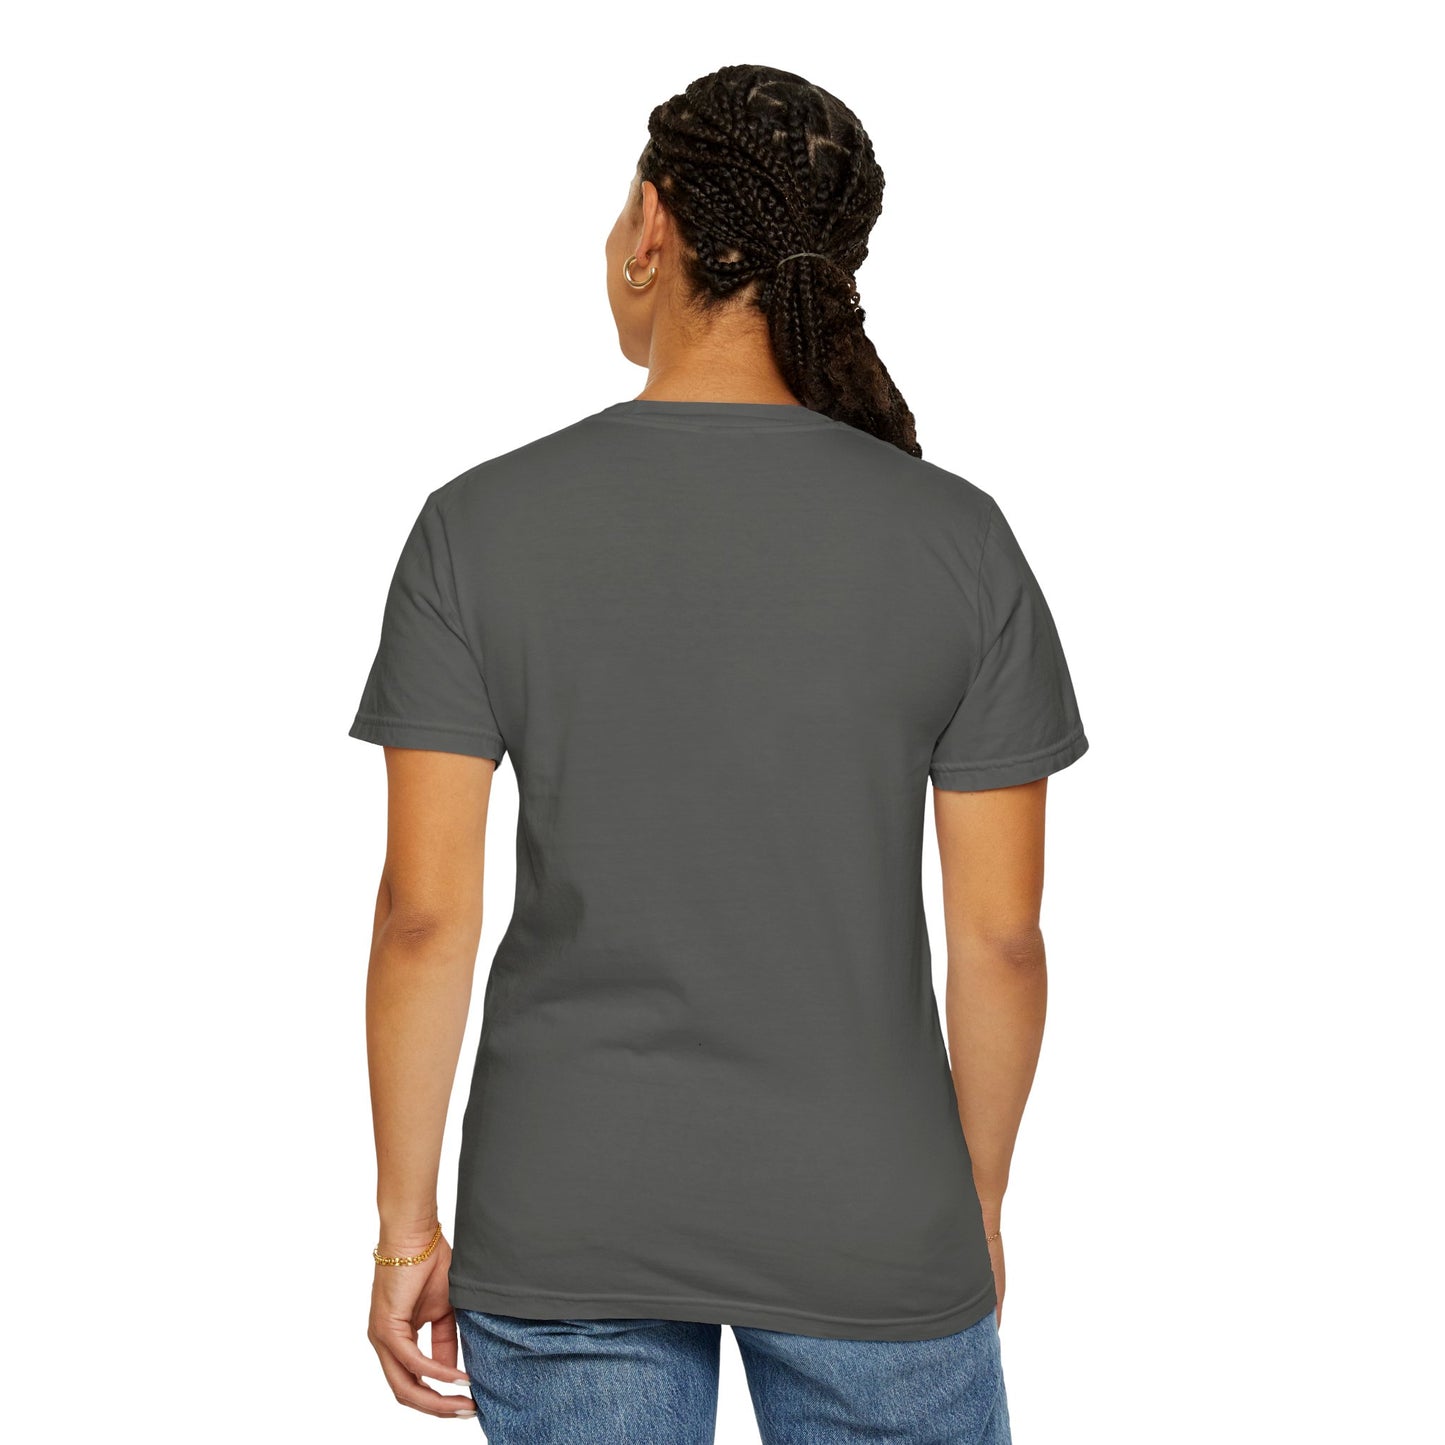 Dear Karma - Unisex Garment-Dyed T-shirt